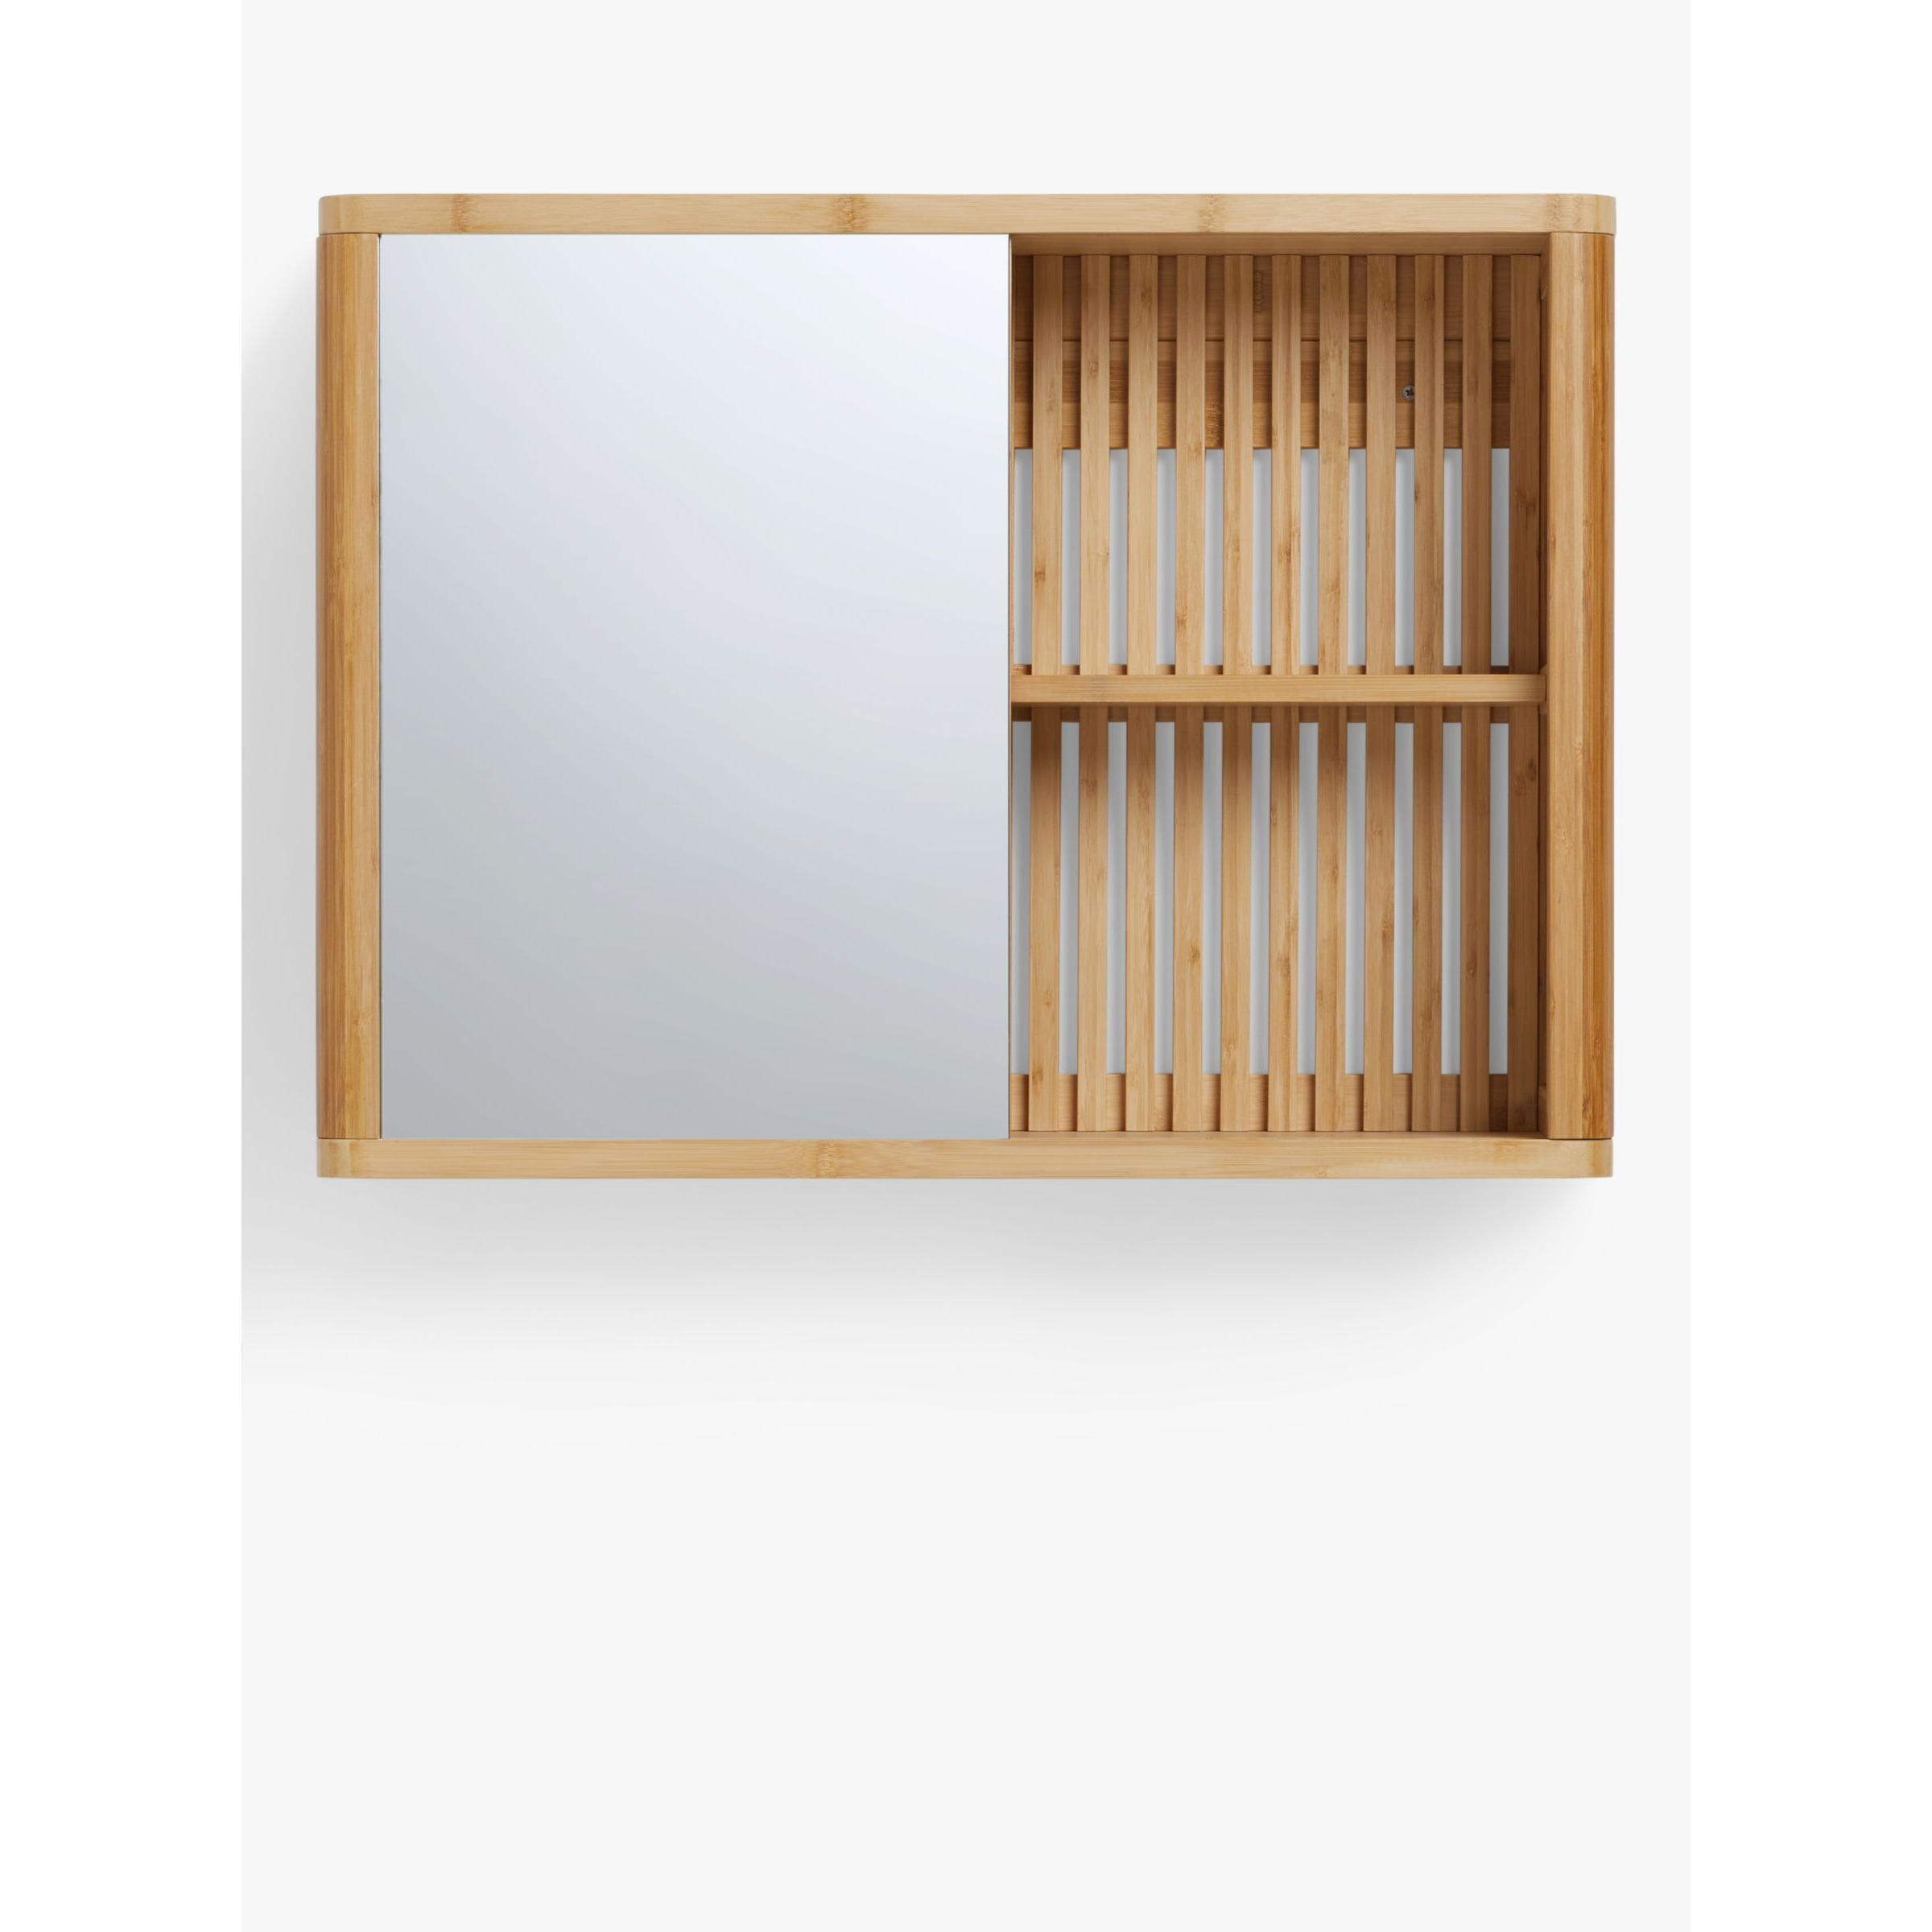 John Lewis Mirrored Slatted Bathroom Cabinet - image 1